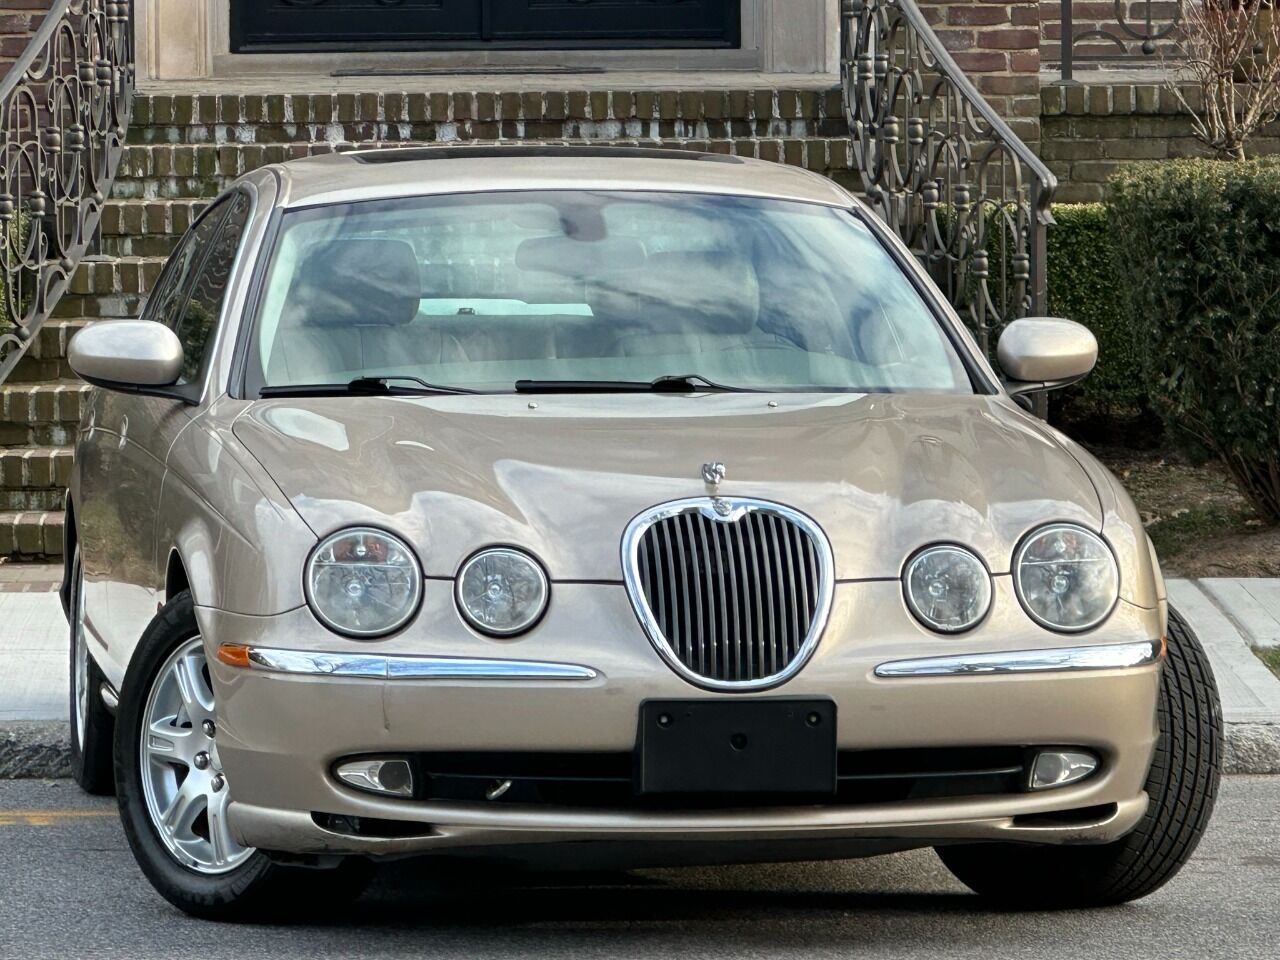 2004 Jaguar S-Type  - $7,900